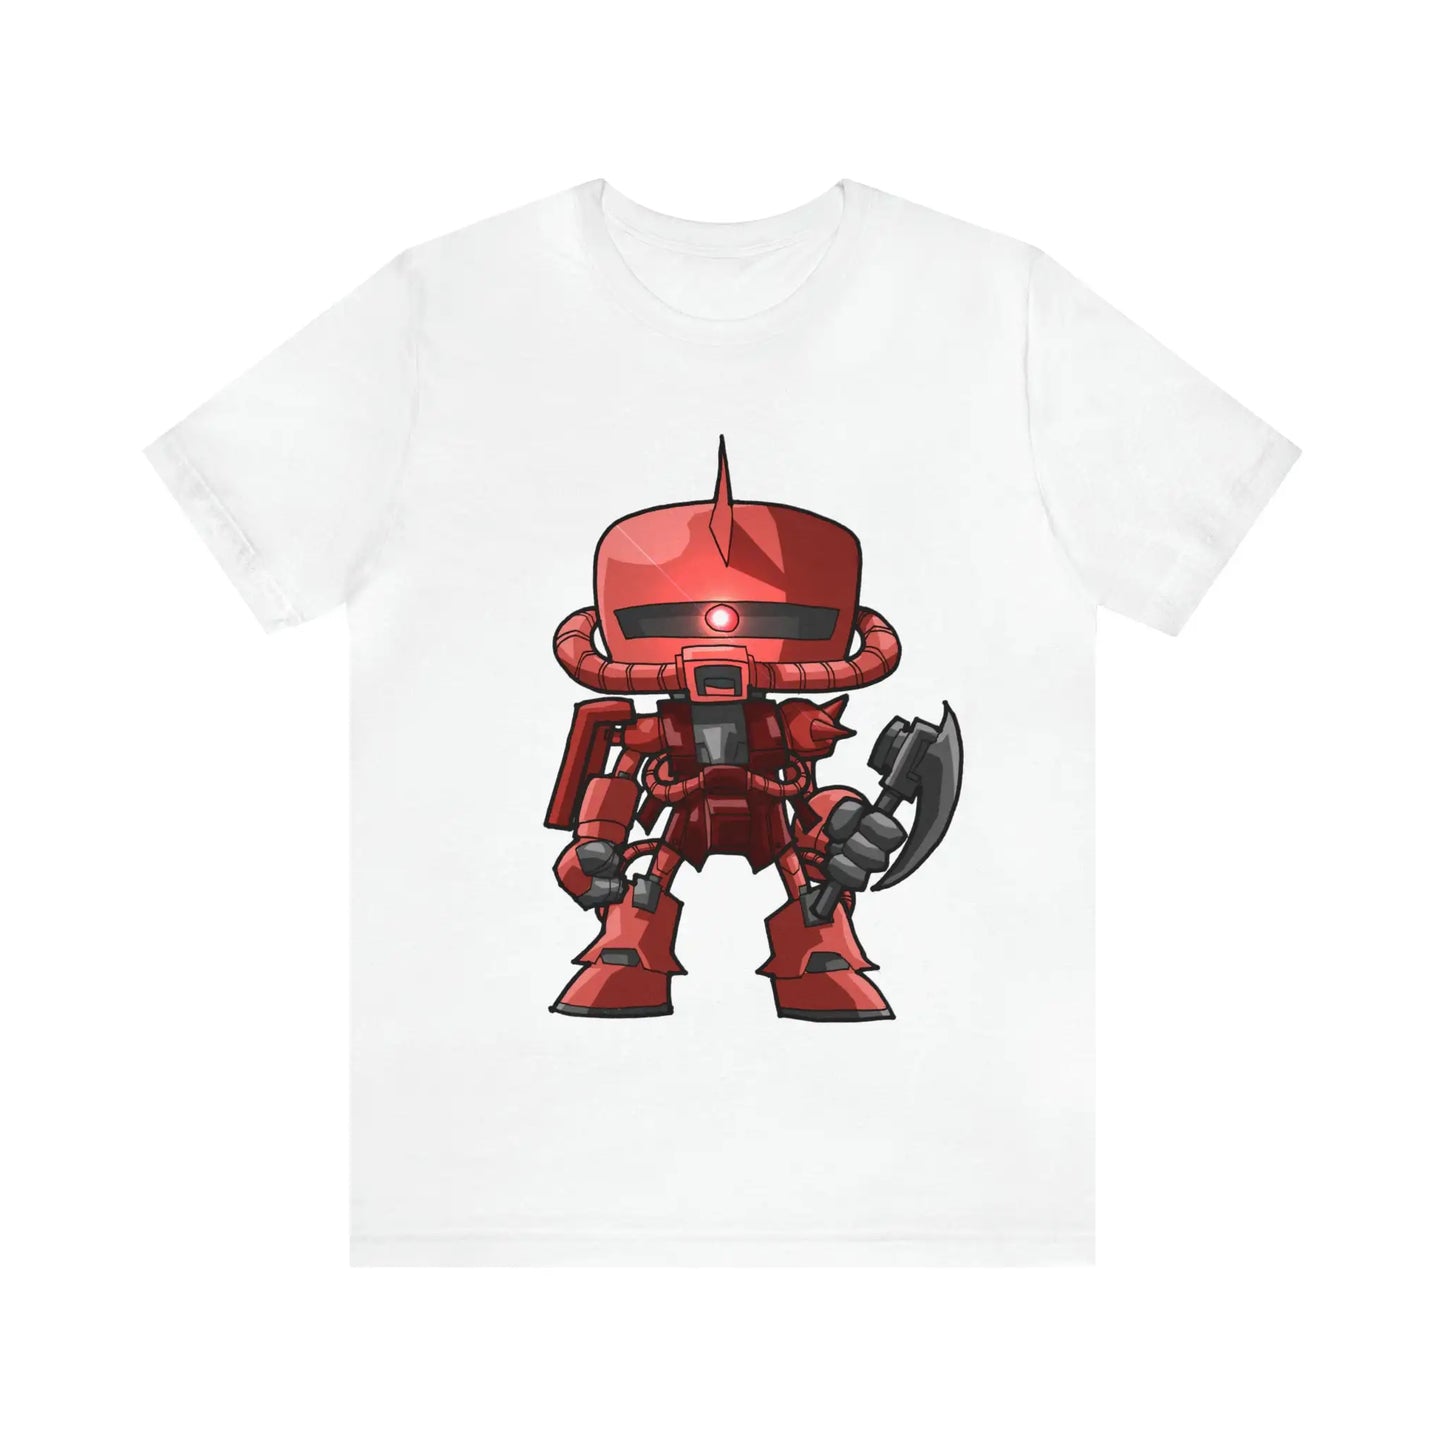 Red Zaku Gundam T-Shirt Cartoon Anime Gift Tee Unisex For Men and Women